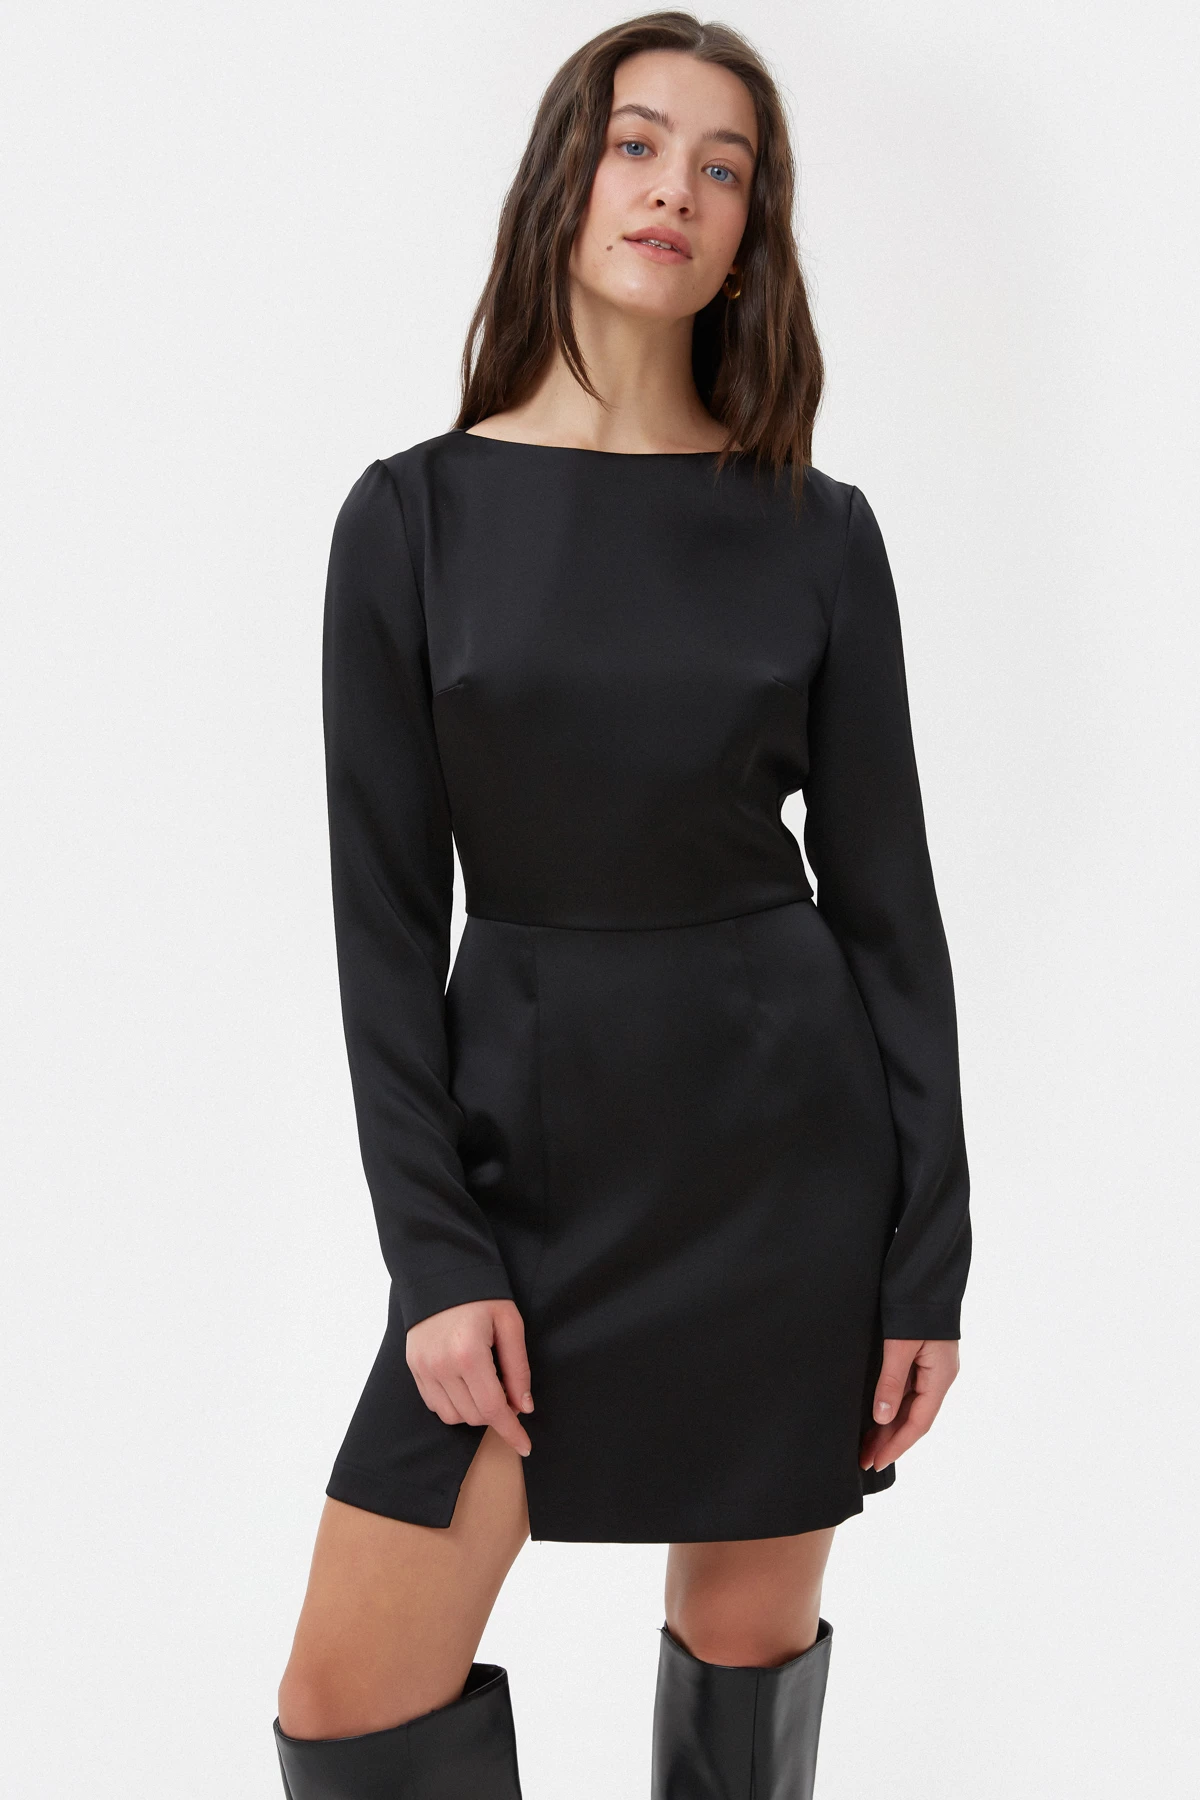 Short black satin dress with long sleeves , photo 2